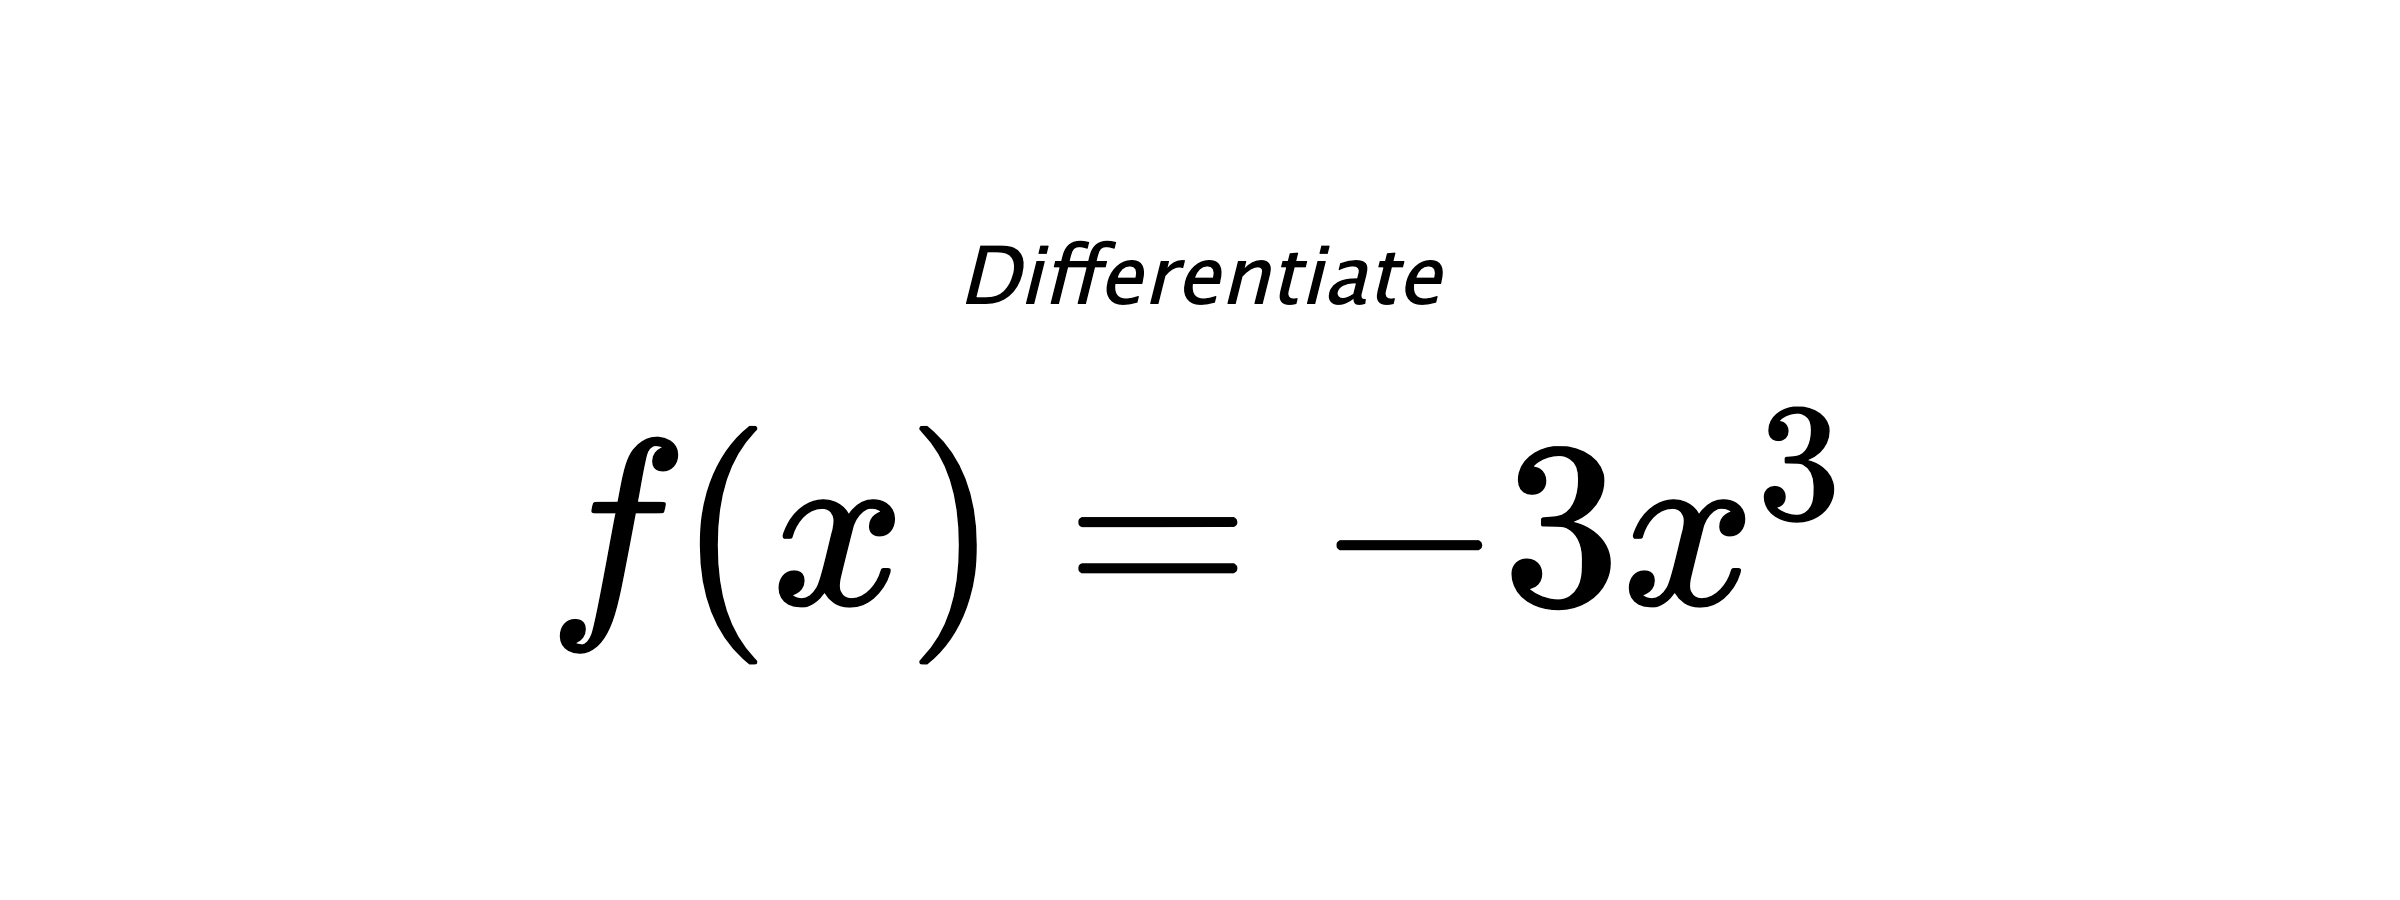 Differentiate $ f(x) = - 3 x^{3} $